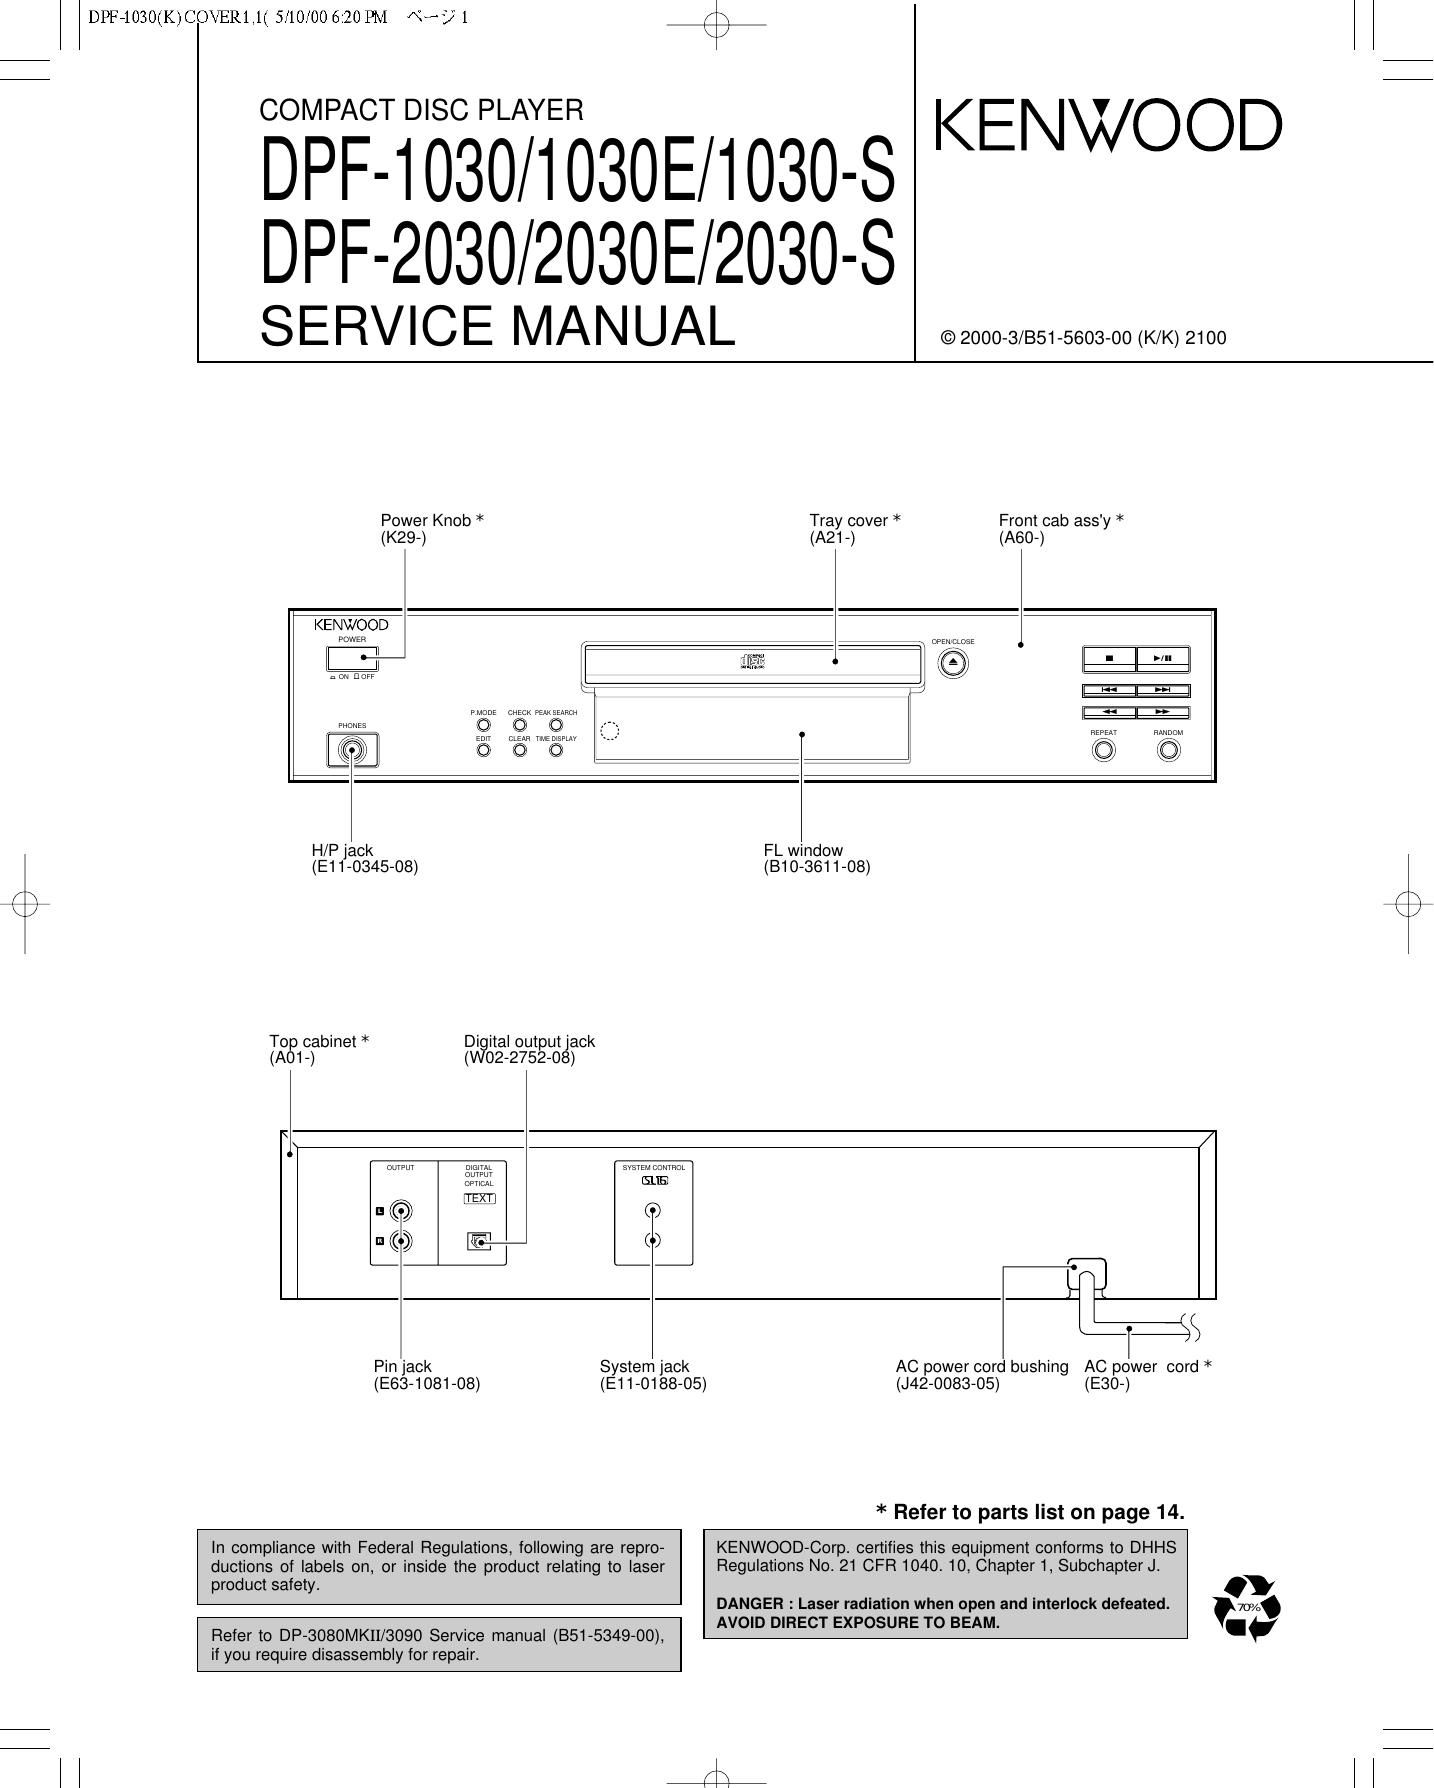 Kenwood DPF 1030 E Service Manual